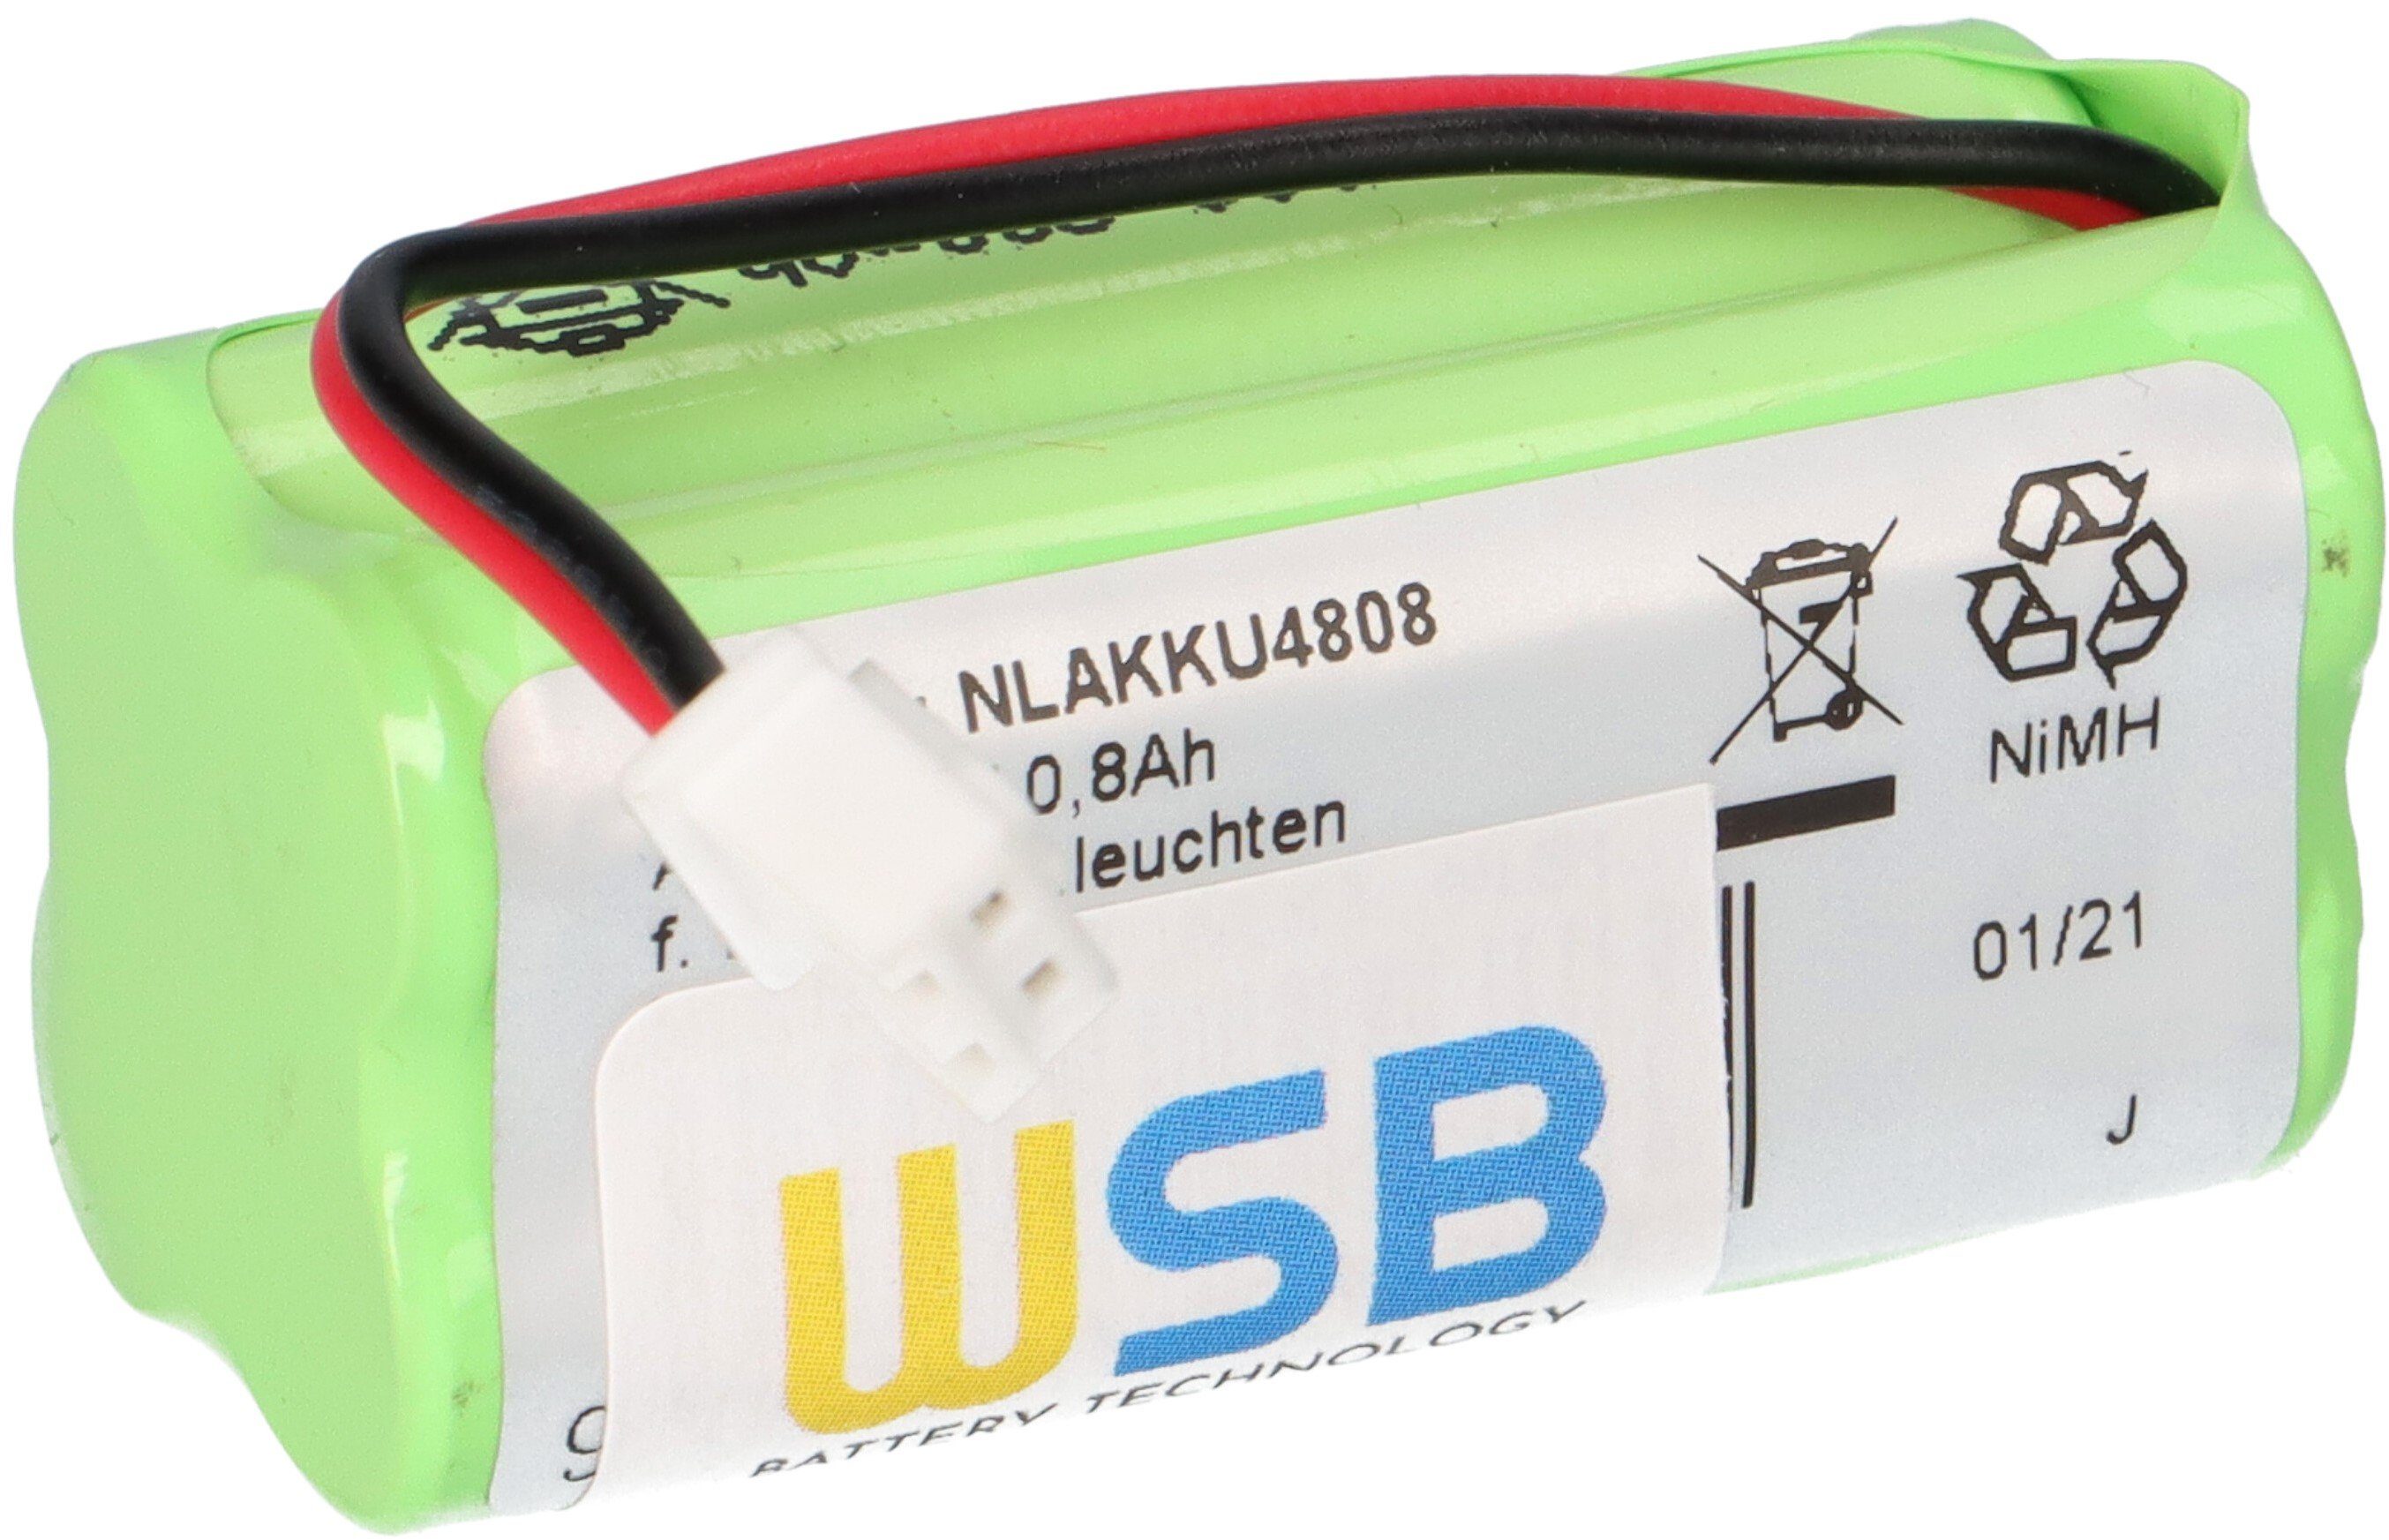 Akku Akkupack und AAA Battery 4,8V F2x2 Stecker Ni-MH Technlology GmbH Notleuchten Kabel WSB 800mAh